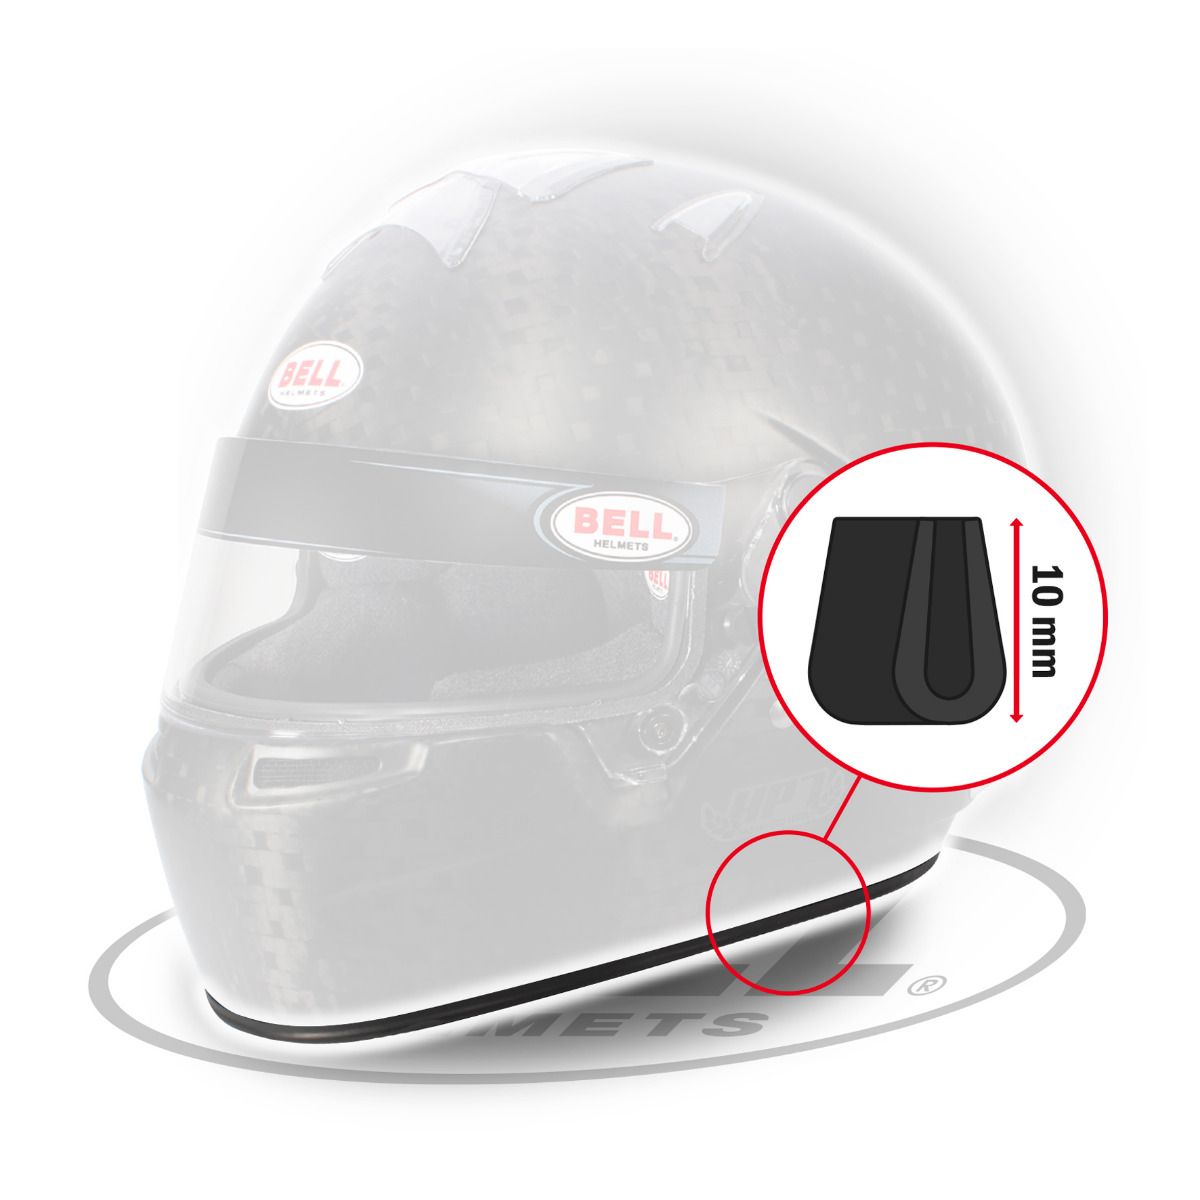 BELL 2090002 Rubber profile kit - trim edge medium (V10), 1.7m length, black (Photo-1)